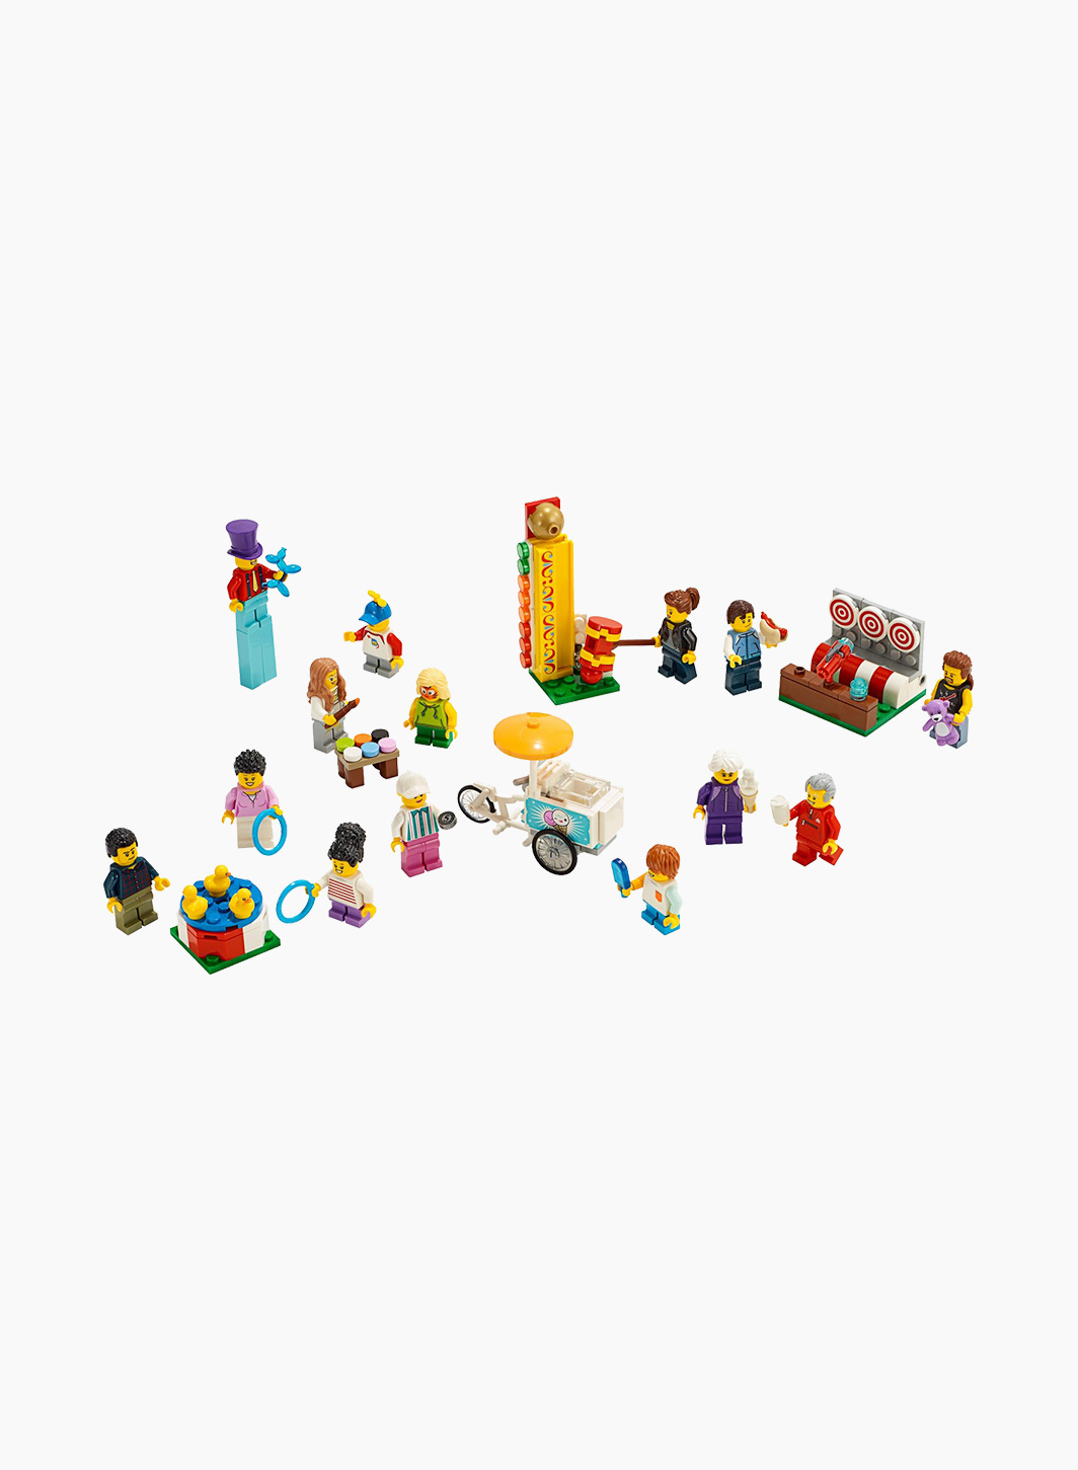 Lego City Конструктор Комплект Минифигурок Веселая Ярмарка